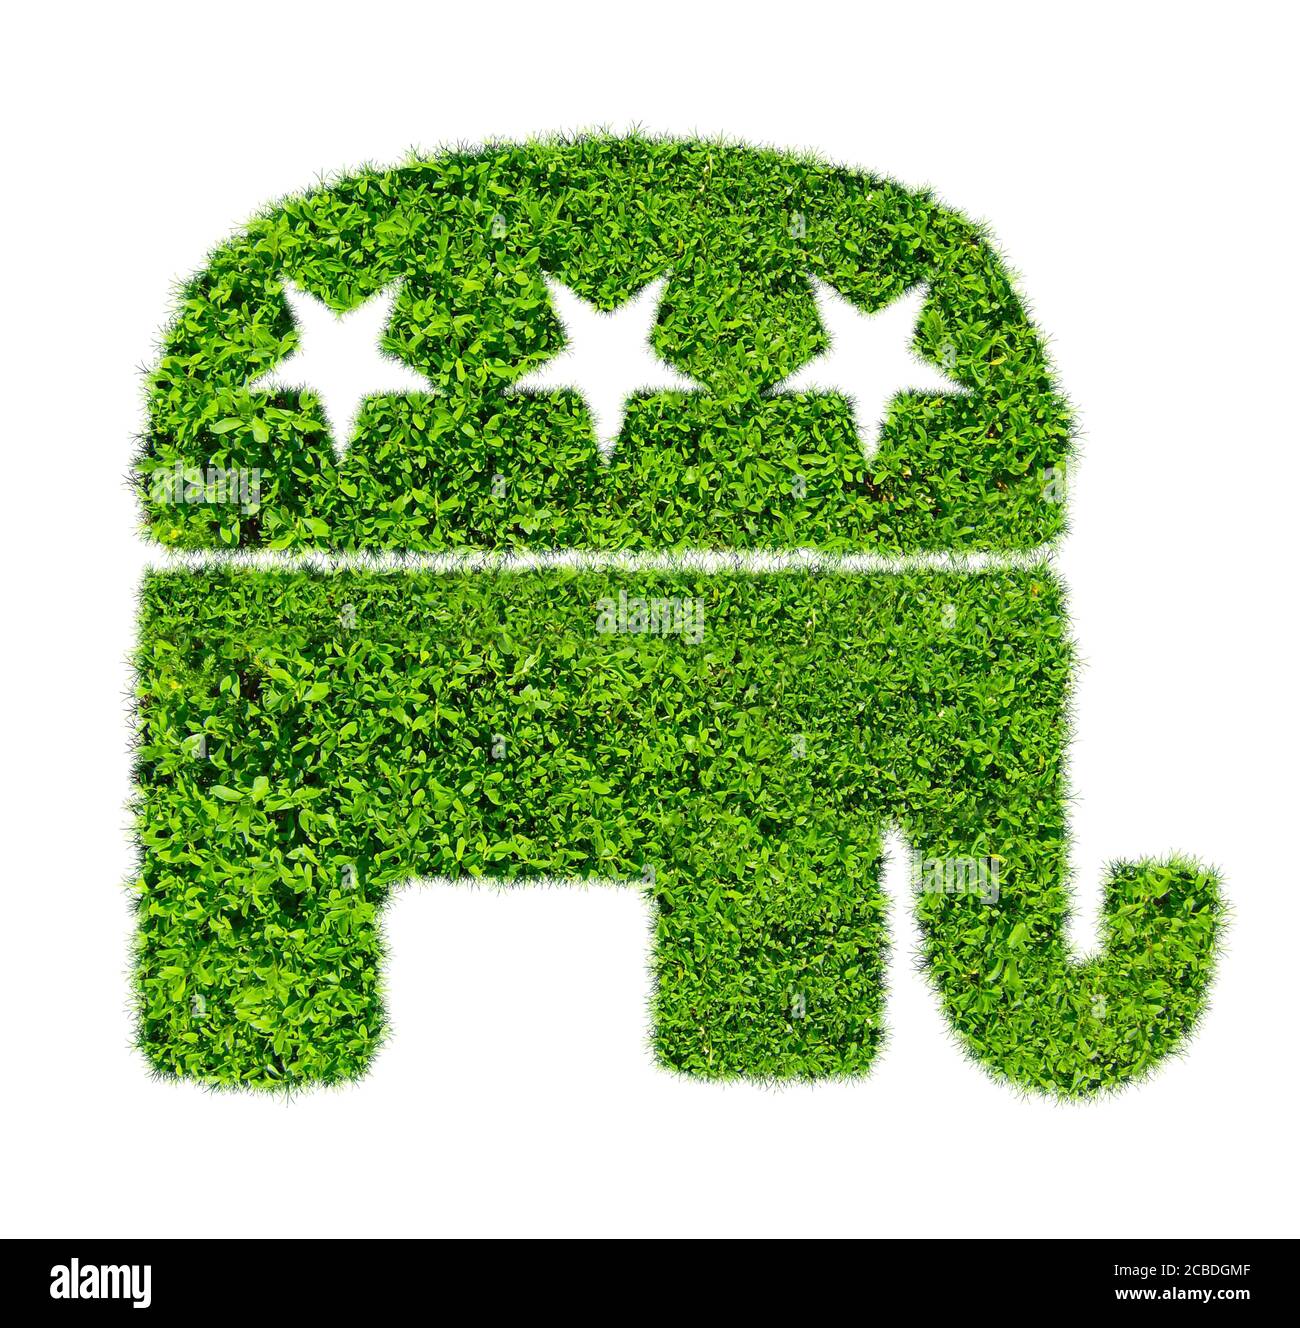 Republican Party - elephant logo icon Stock Photo